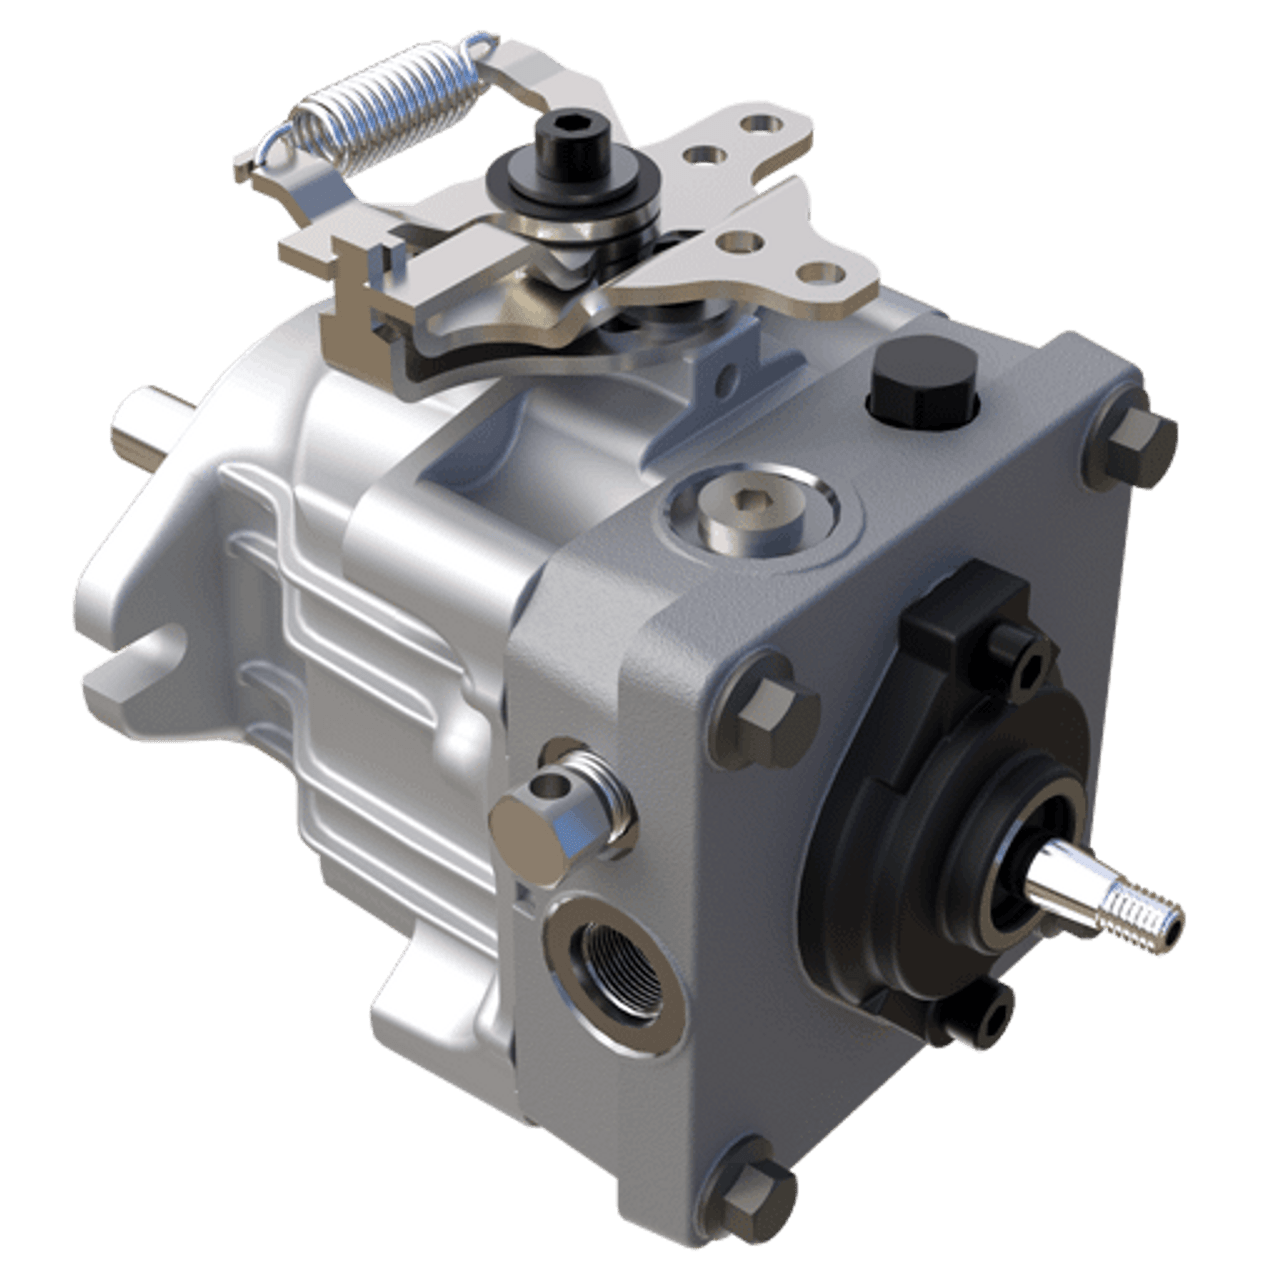 Hydro Gear PG-ABBB-DA1X-XXXX Hydraulic Pump P Series | Original OEM Part | Free Shipping - LawnMowerPartsWorld.com